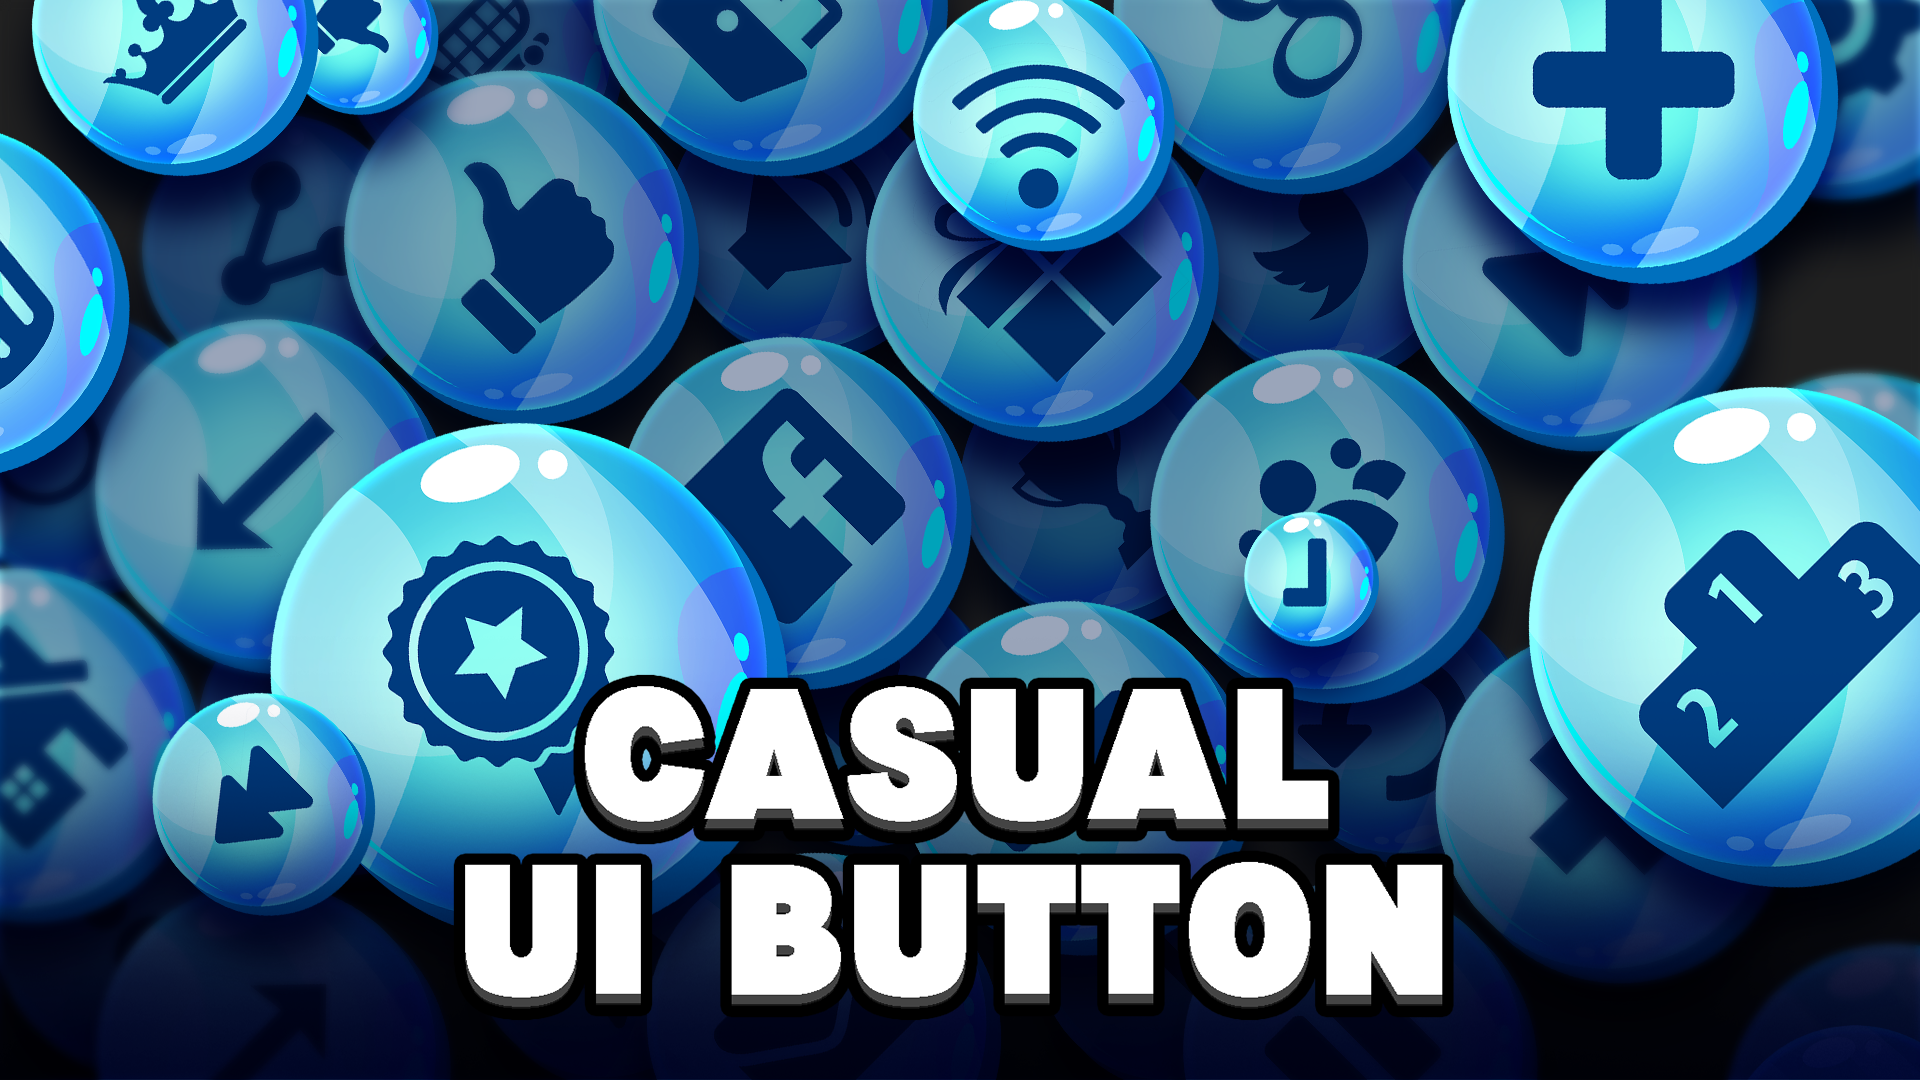 Casual UI Button #4